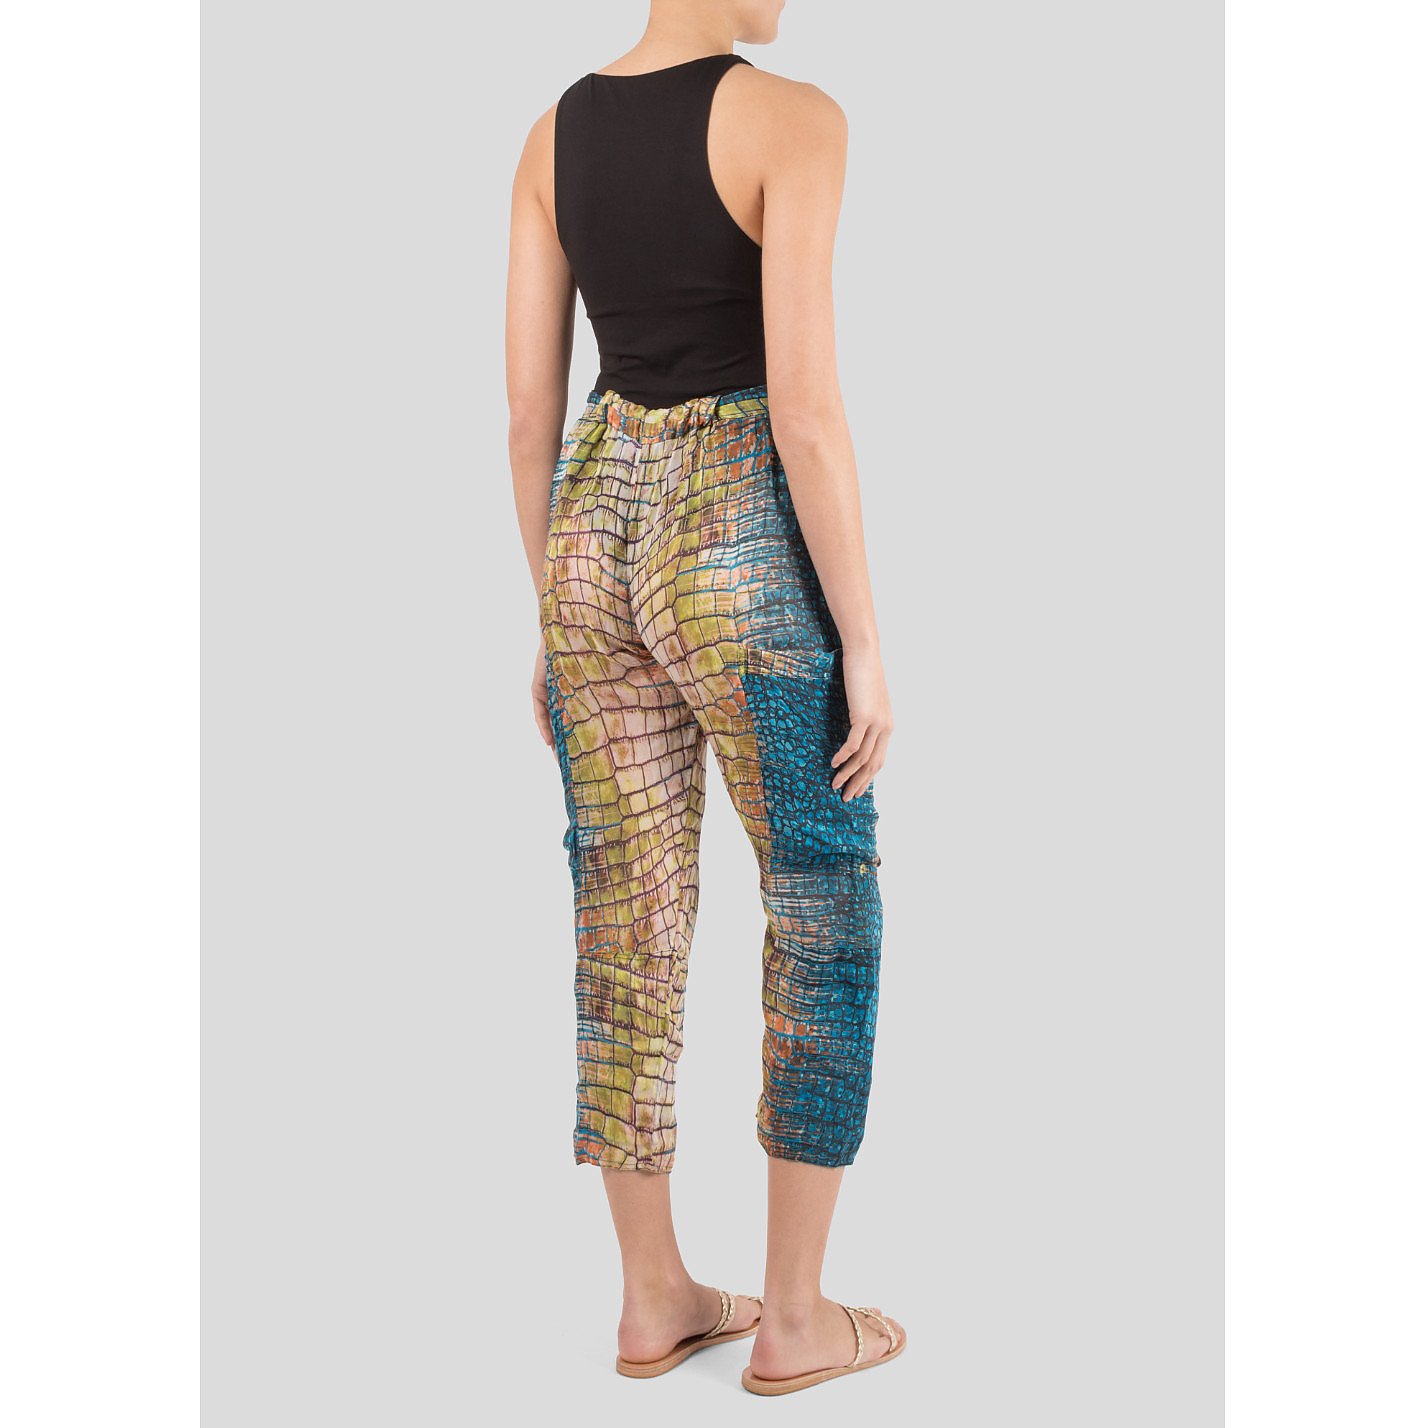 Sariyah Snakeskin Pant Set  Browncombo  Fashion Nova Matching Sets   Fashion Nova